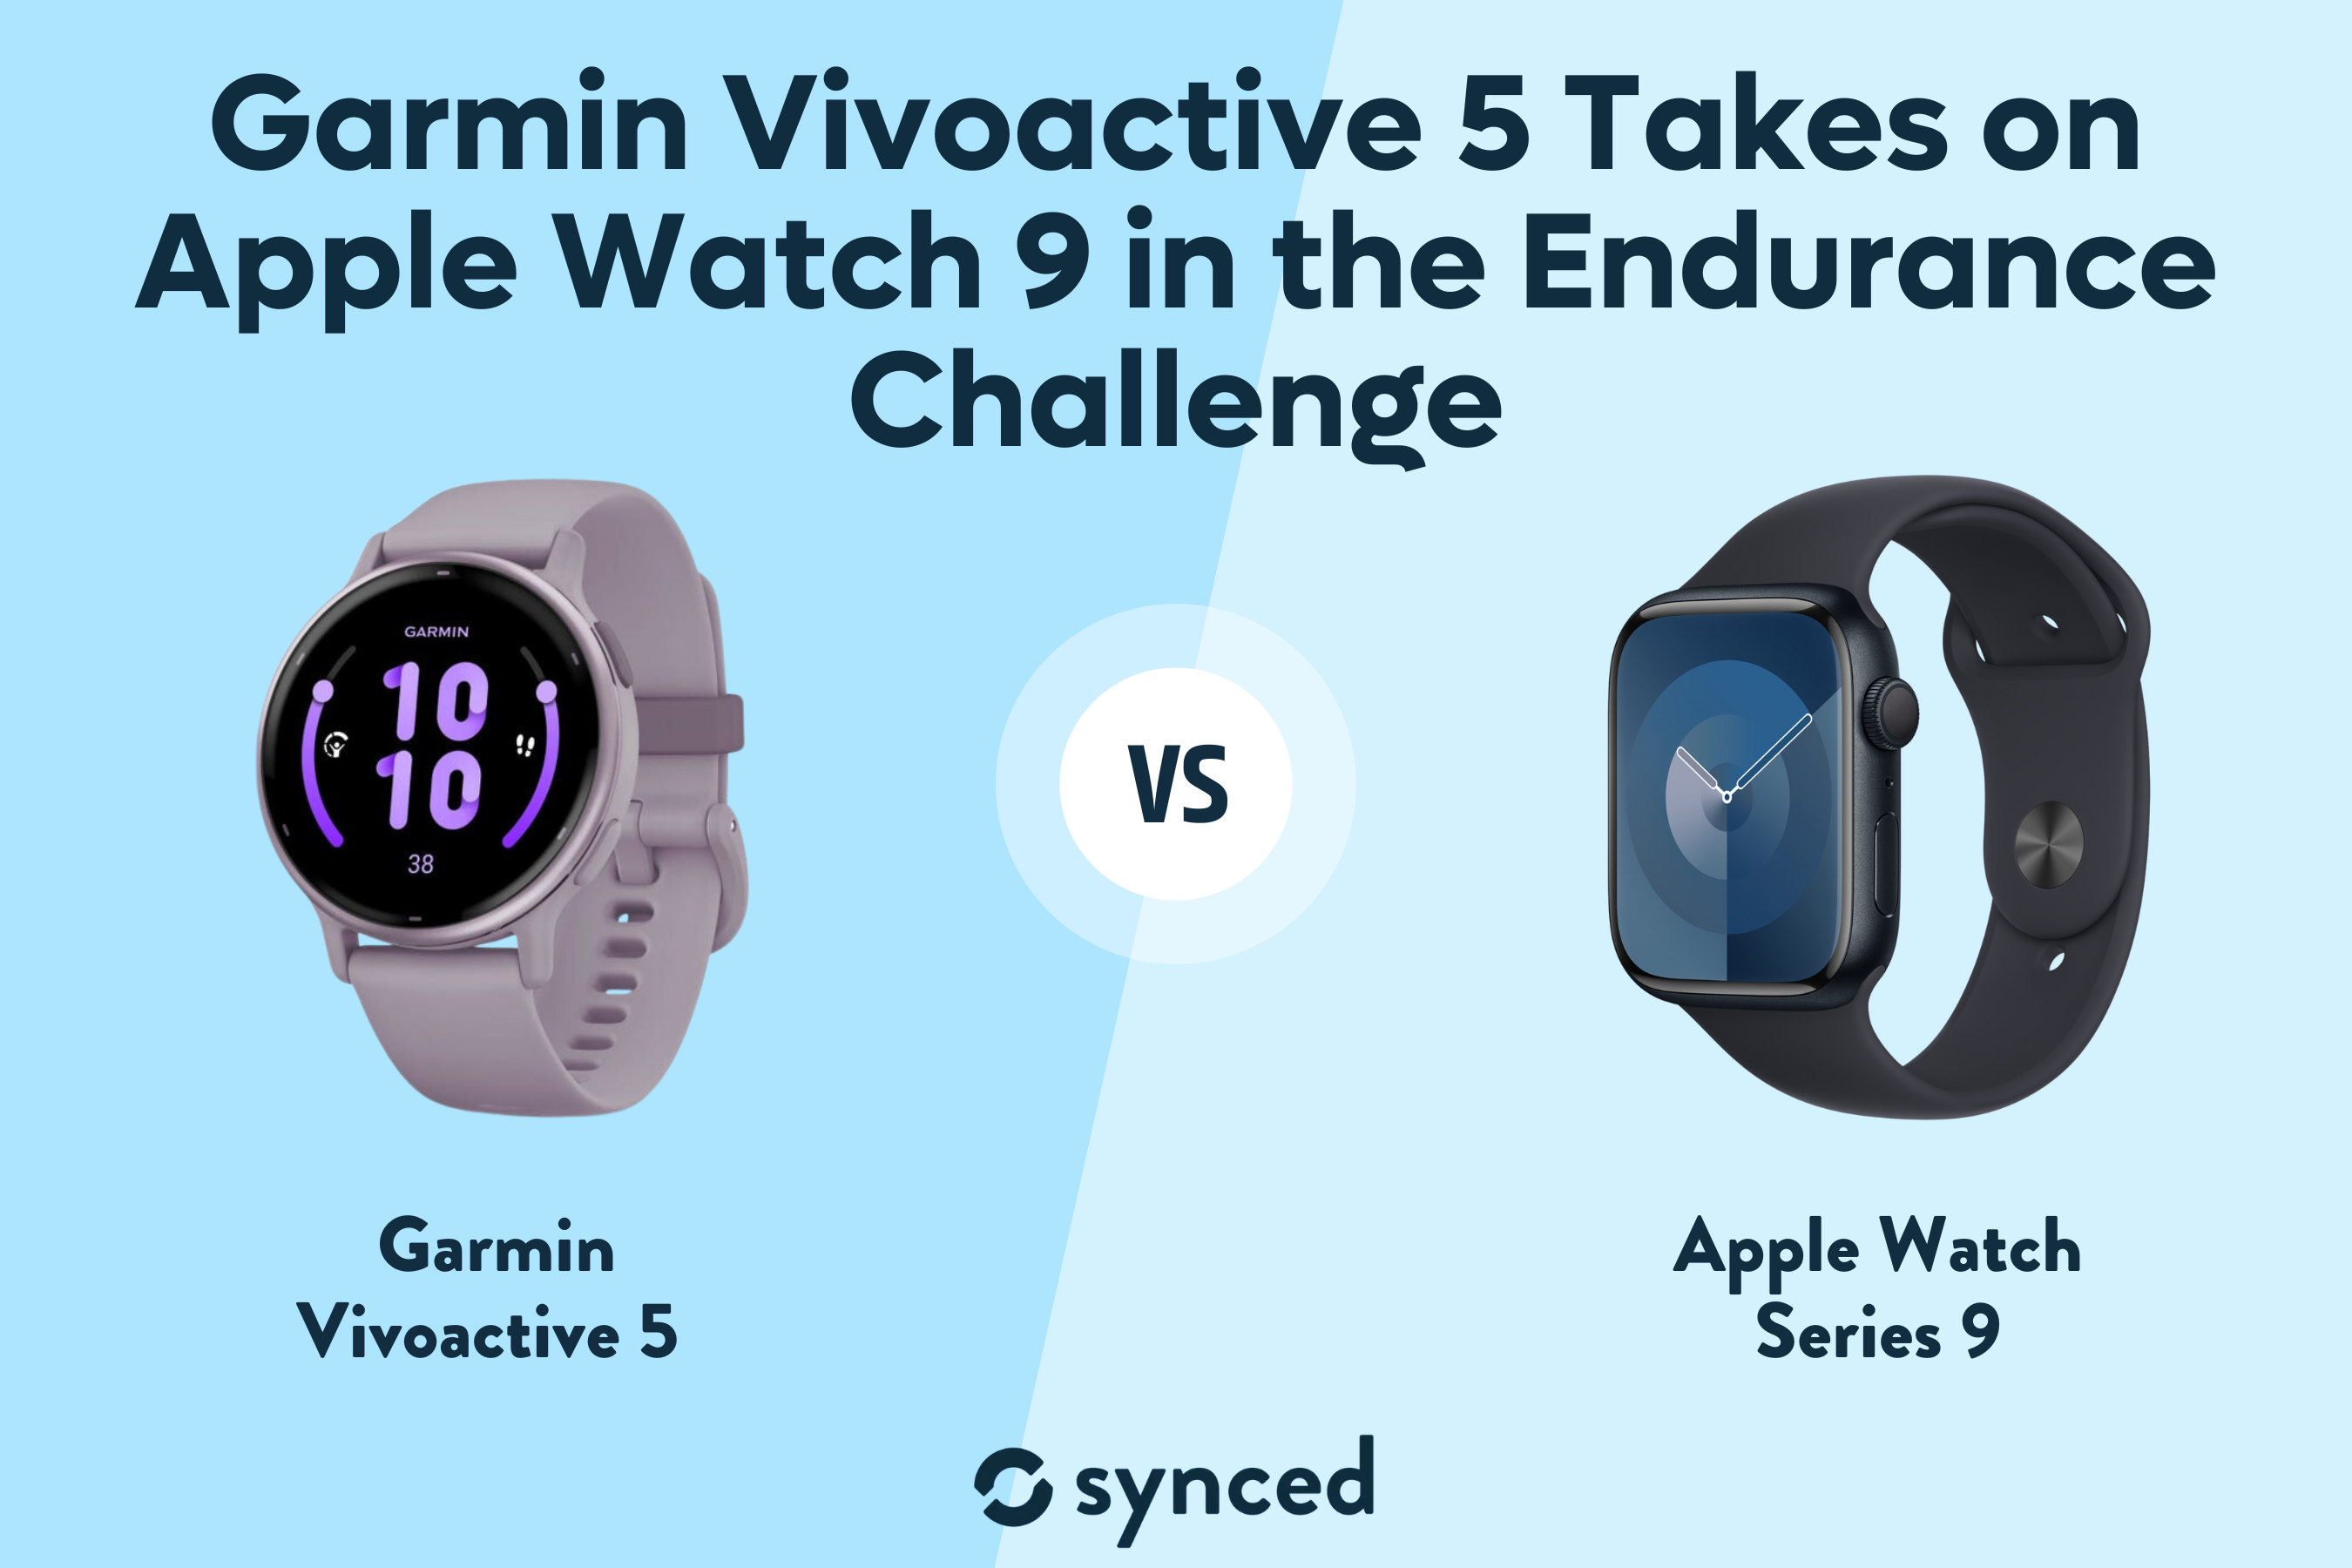 Garmin Vivoactive 5 vs Apple Watch Series 9